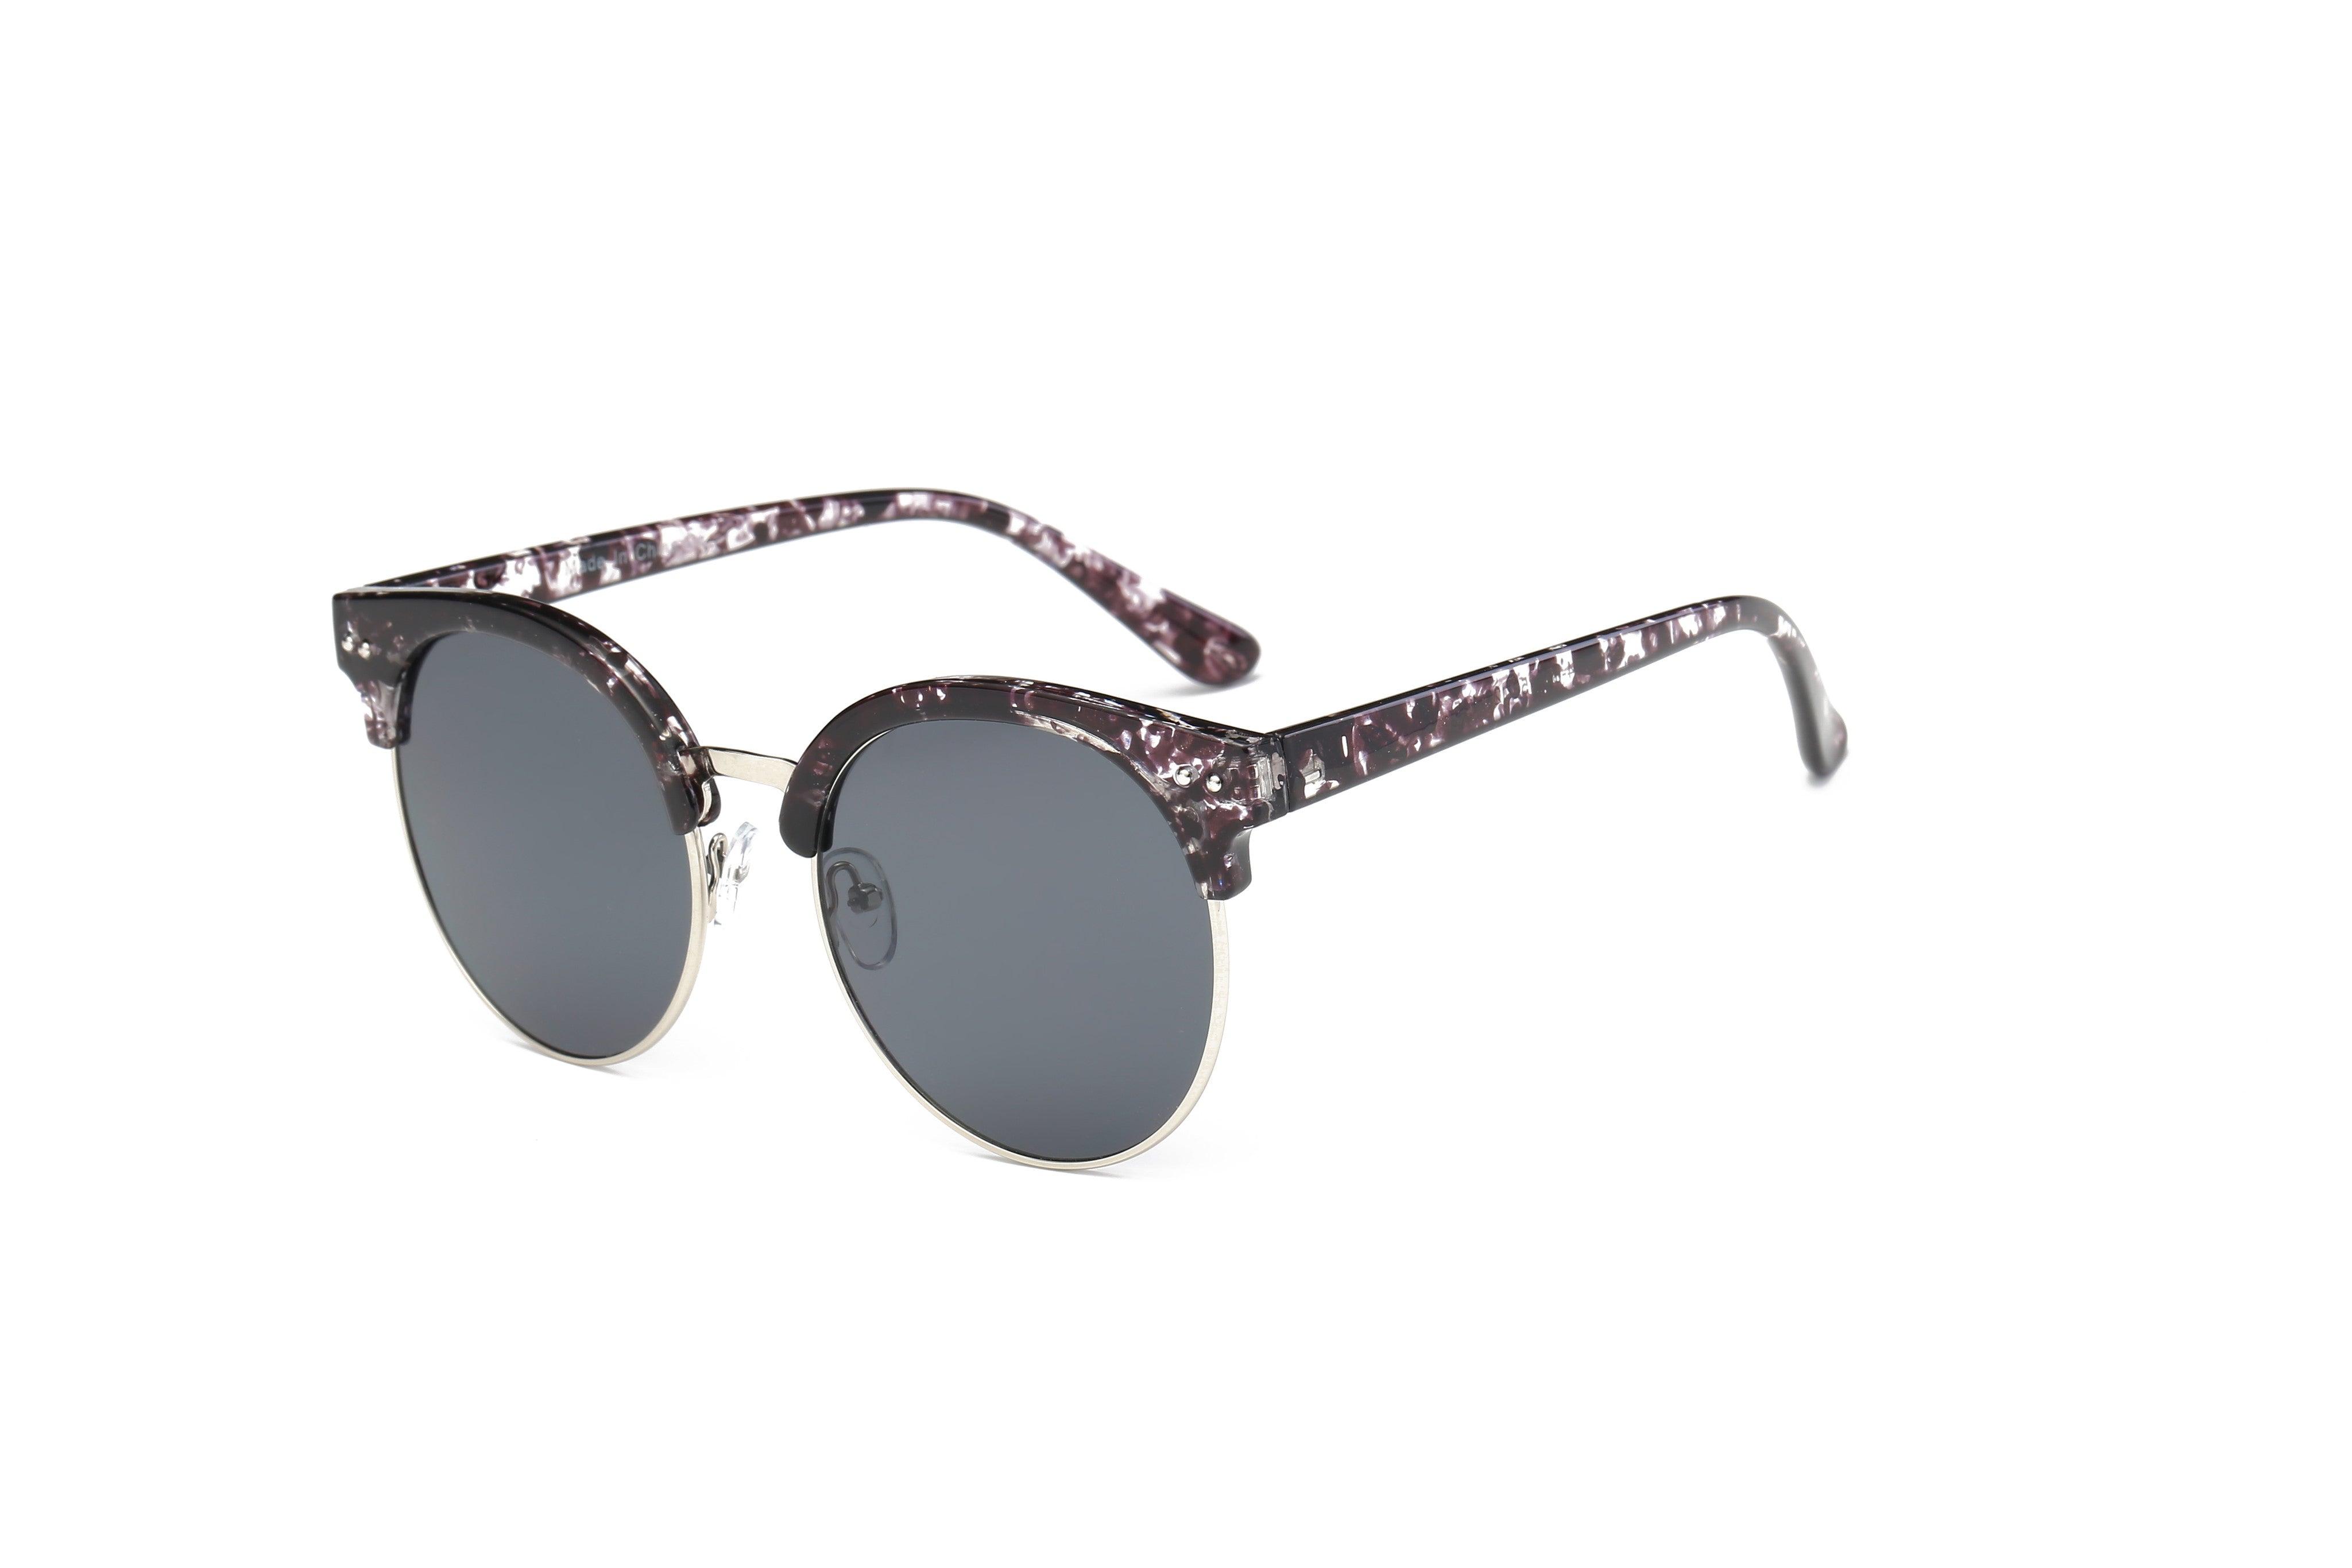 D66 - Retro Fashion Round Clubmaster Flat Lens Sunglasses Marble FRAME - Black Lens